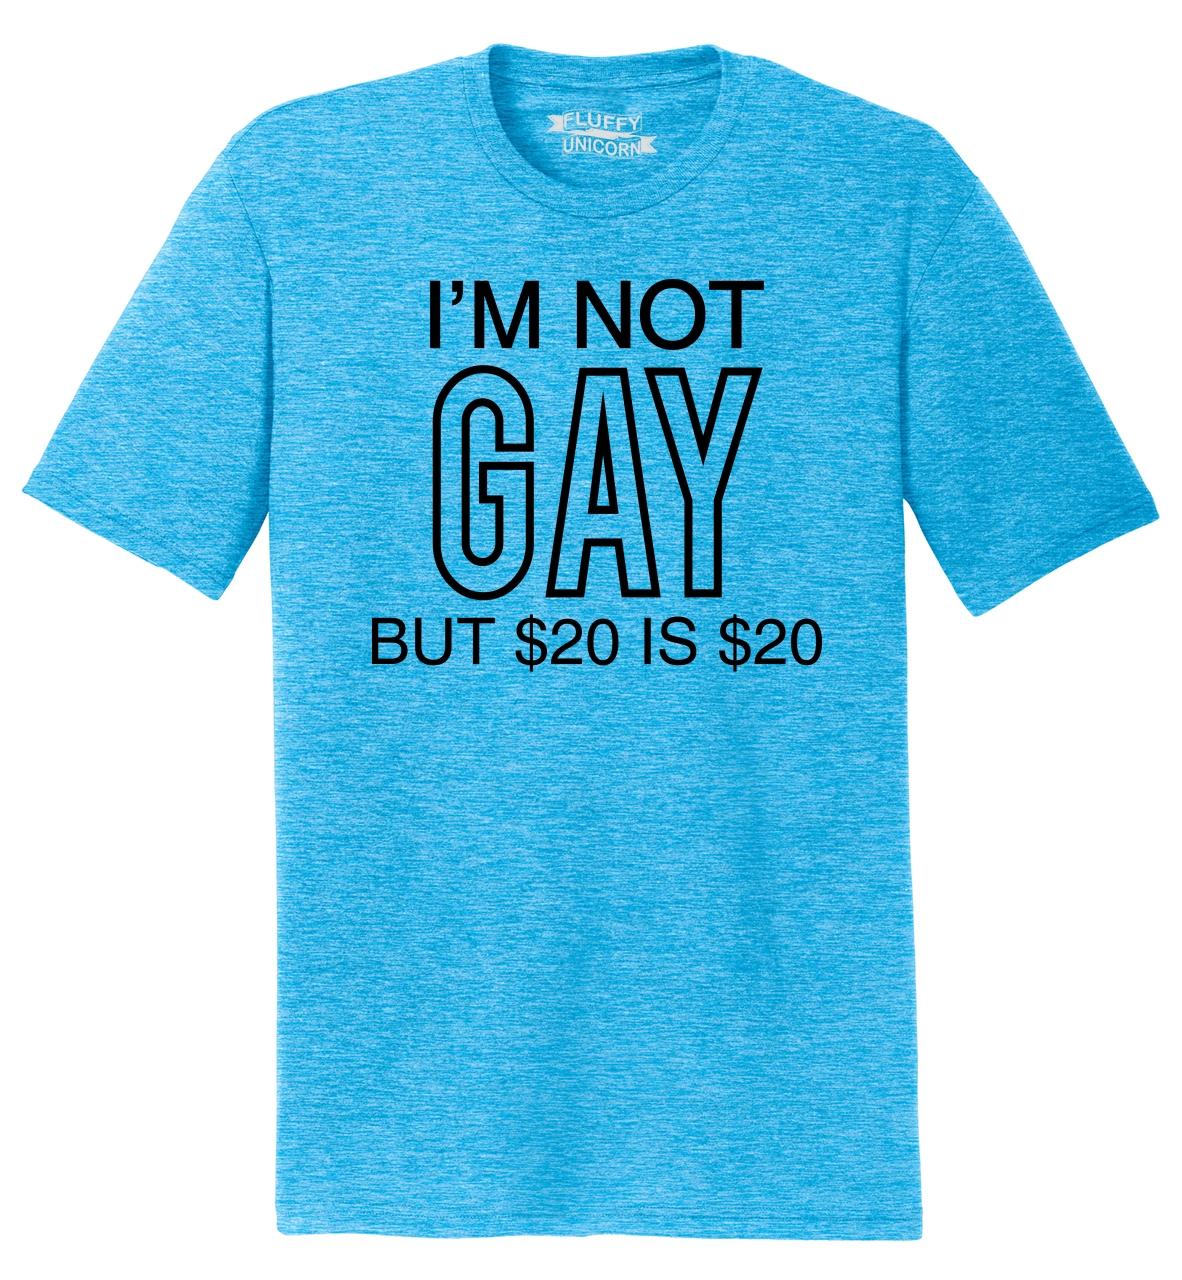 I'm not gay but $20 is $20 Funny Quote T-shirt Vest Tank Top Men Women Unisex 